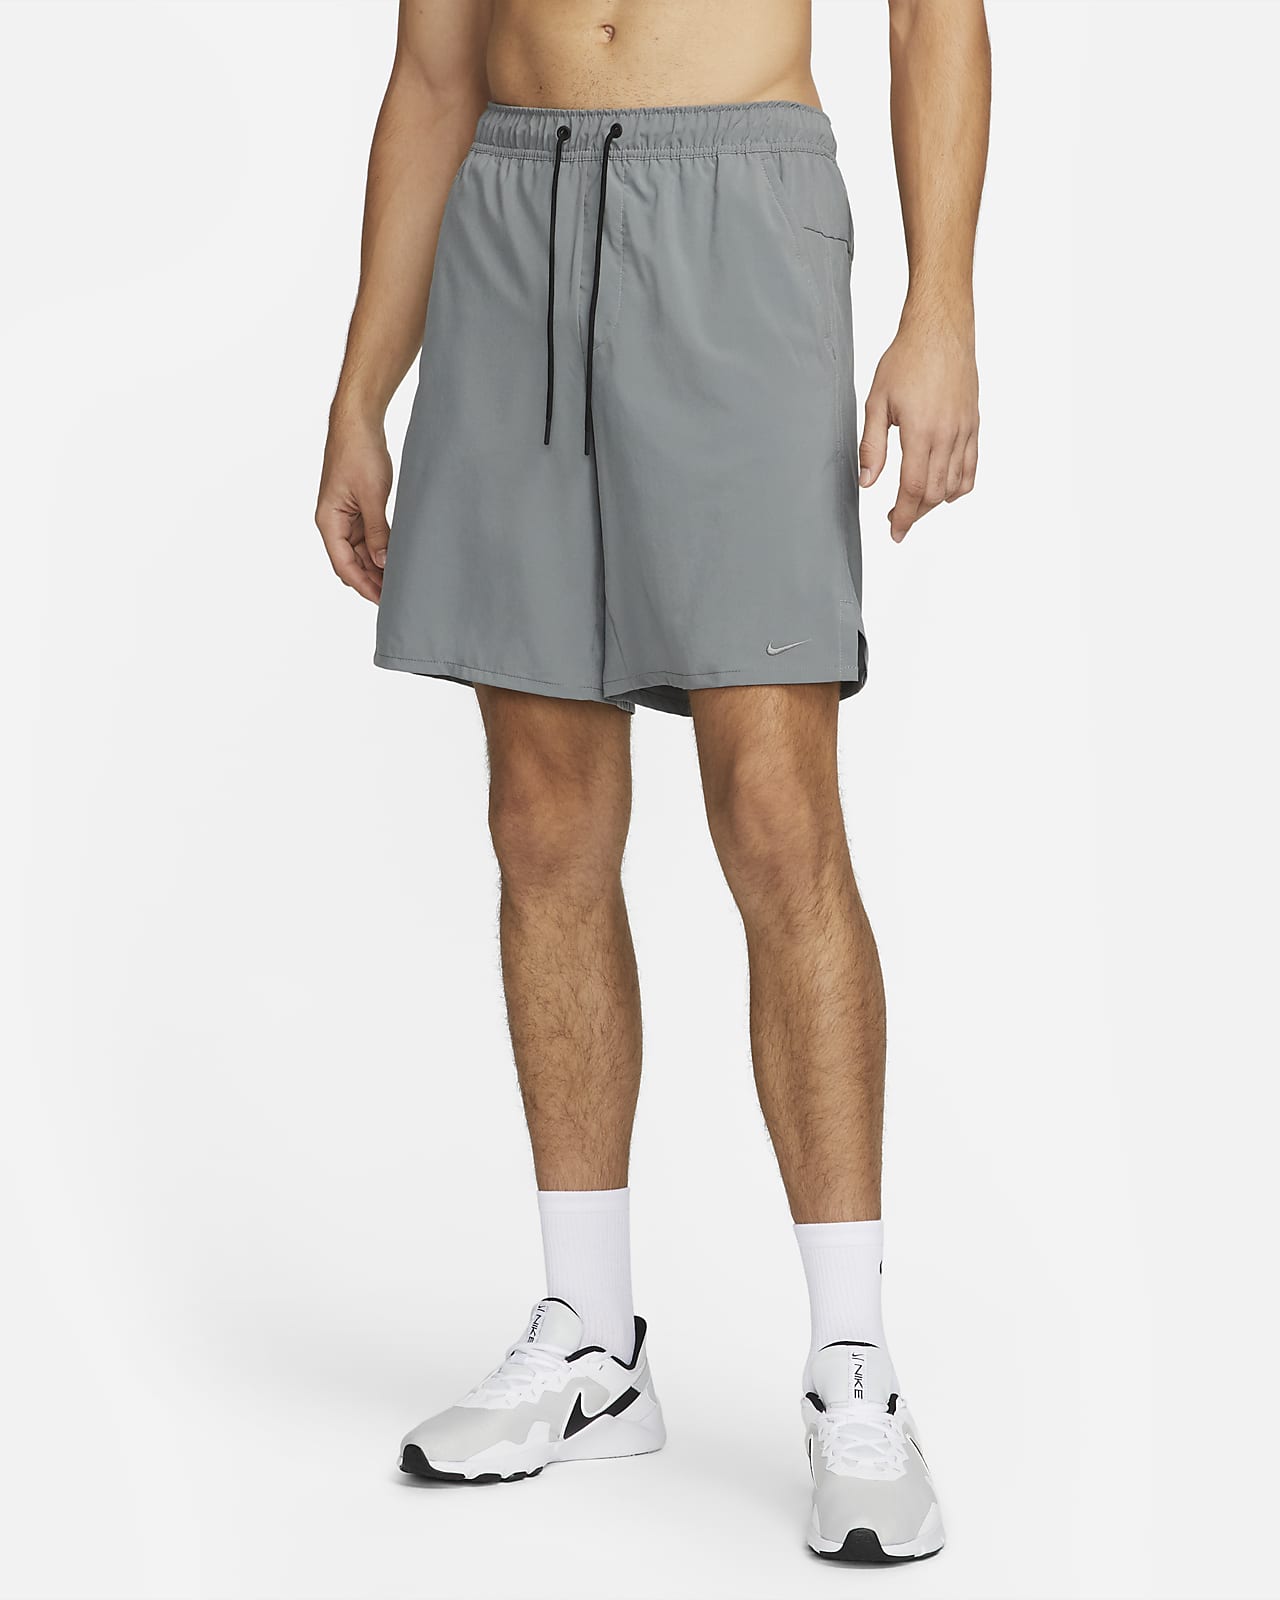 Nike Dri-FIT Unlimited Men's 7 2-in-1 Versatile Shorts - Black